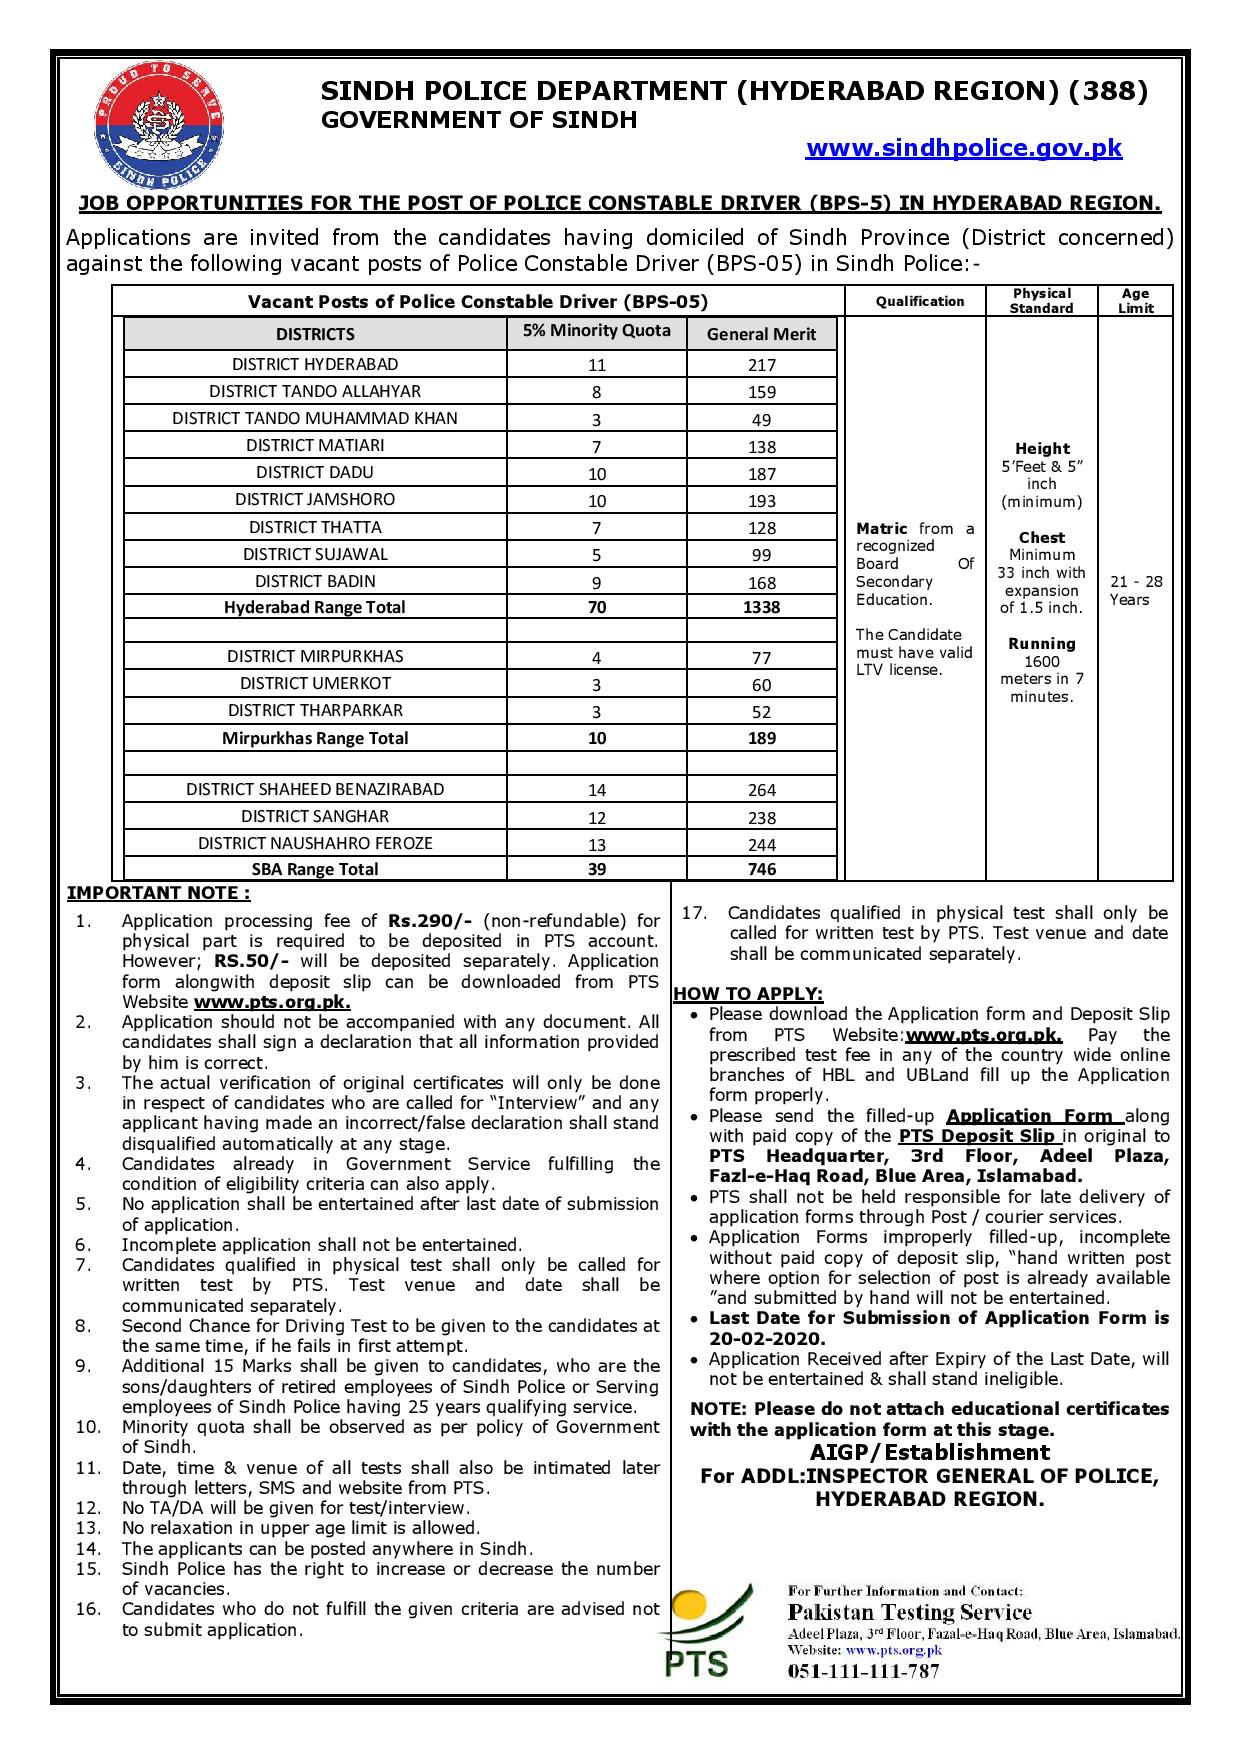 Sindh Police Hyderabad Range Jobs 2020 Driver Constable